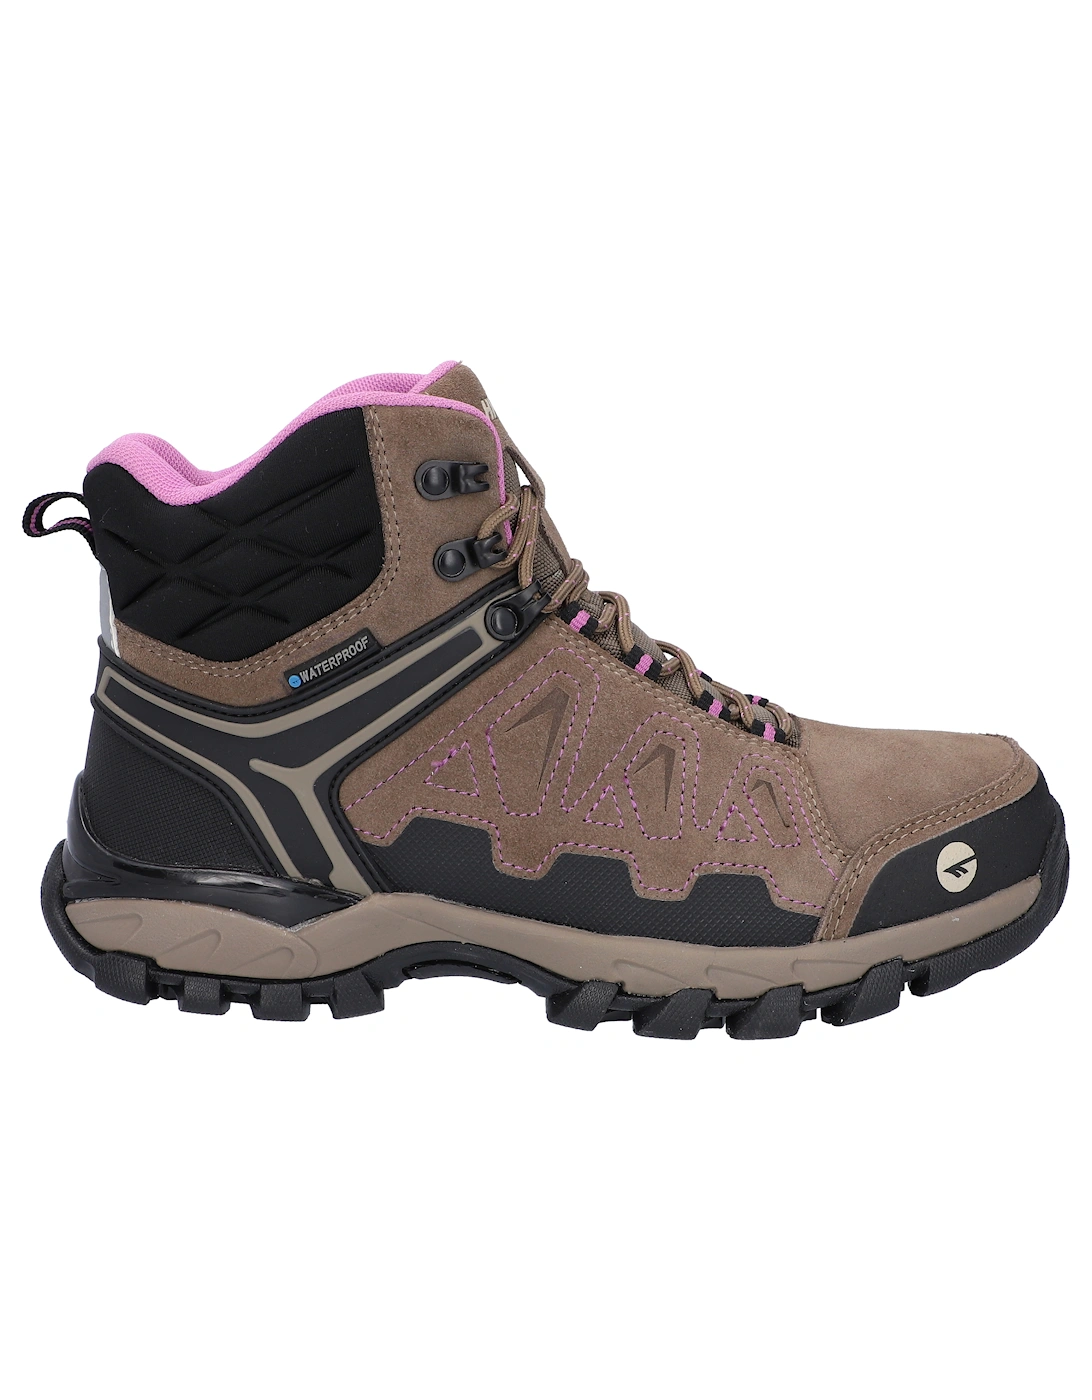 Womens Walking Boots v Lite Explorer Waterproof Lace Up brown UK Size